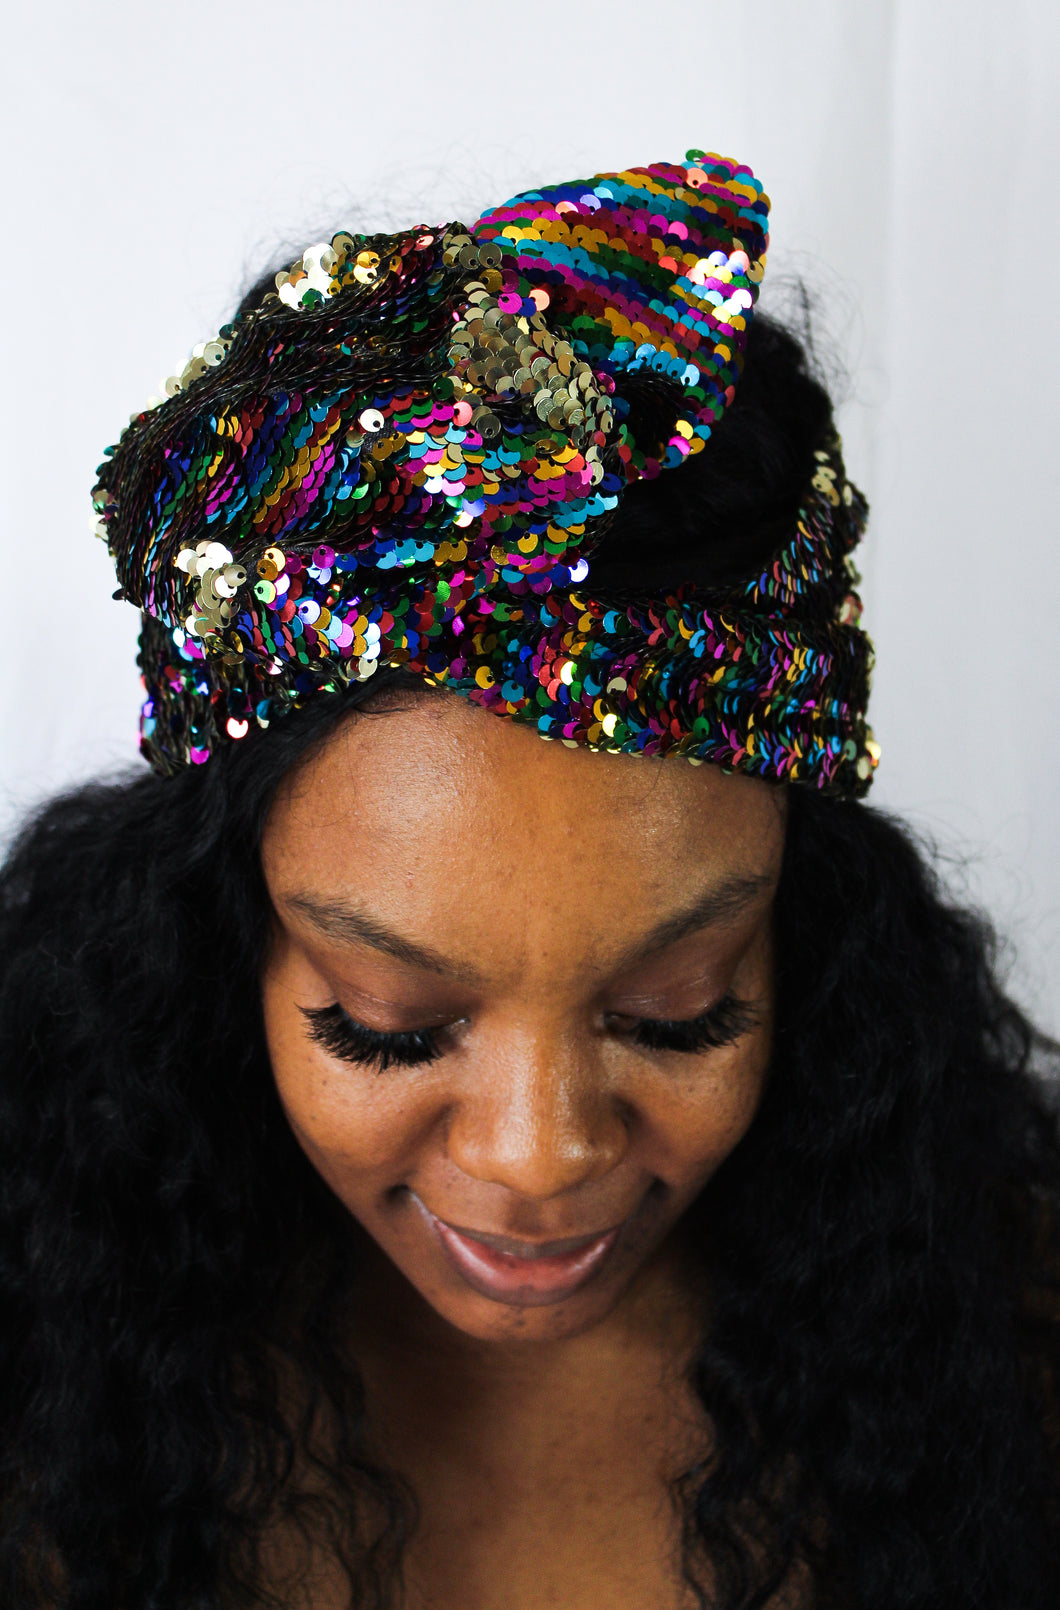 Reversible Magic Sequin Headwraps/Turbans/Headbands (5 Color Options)